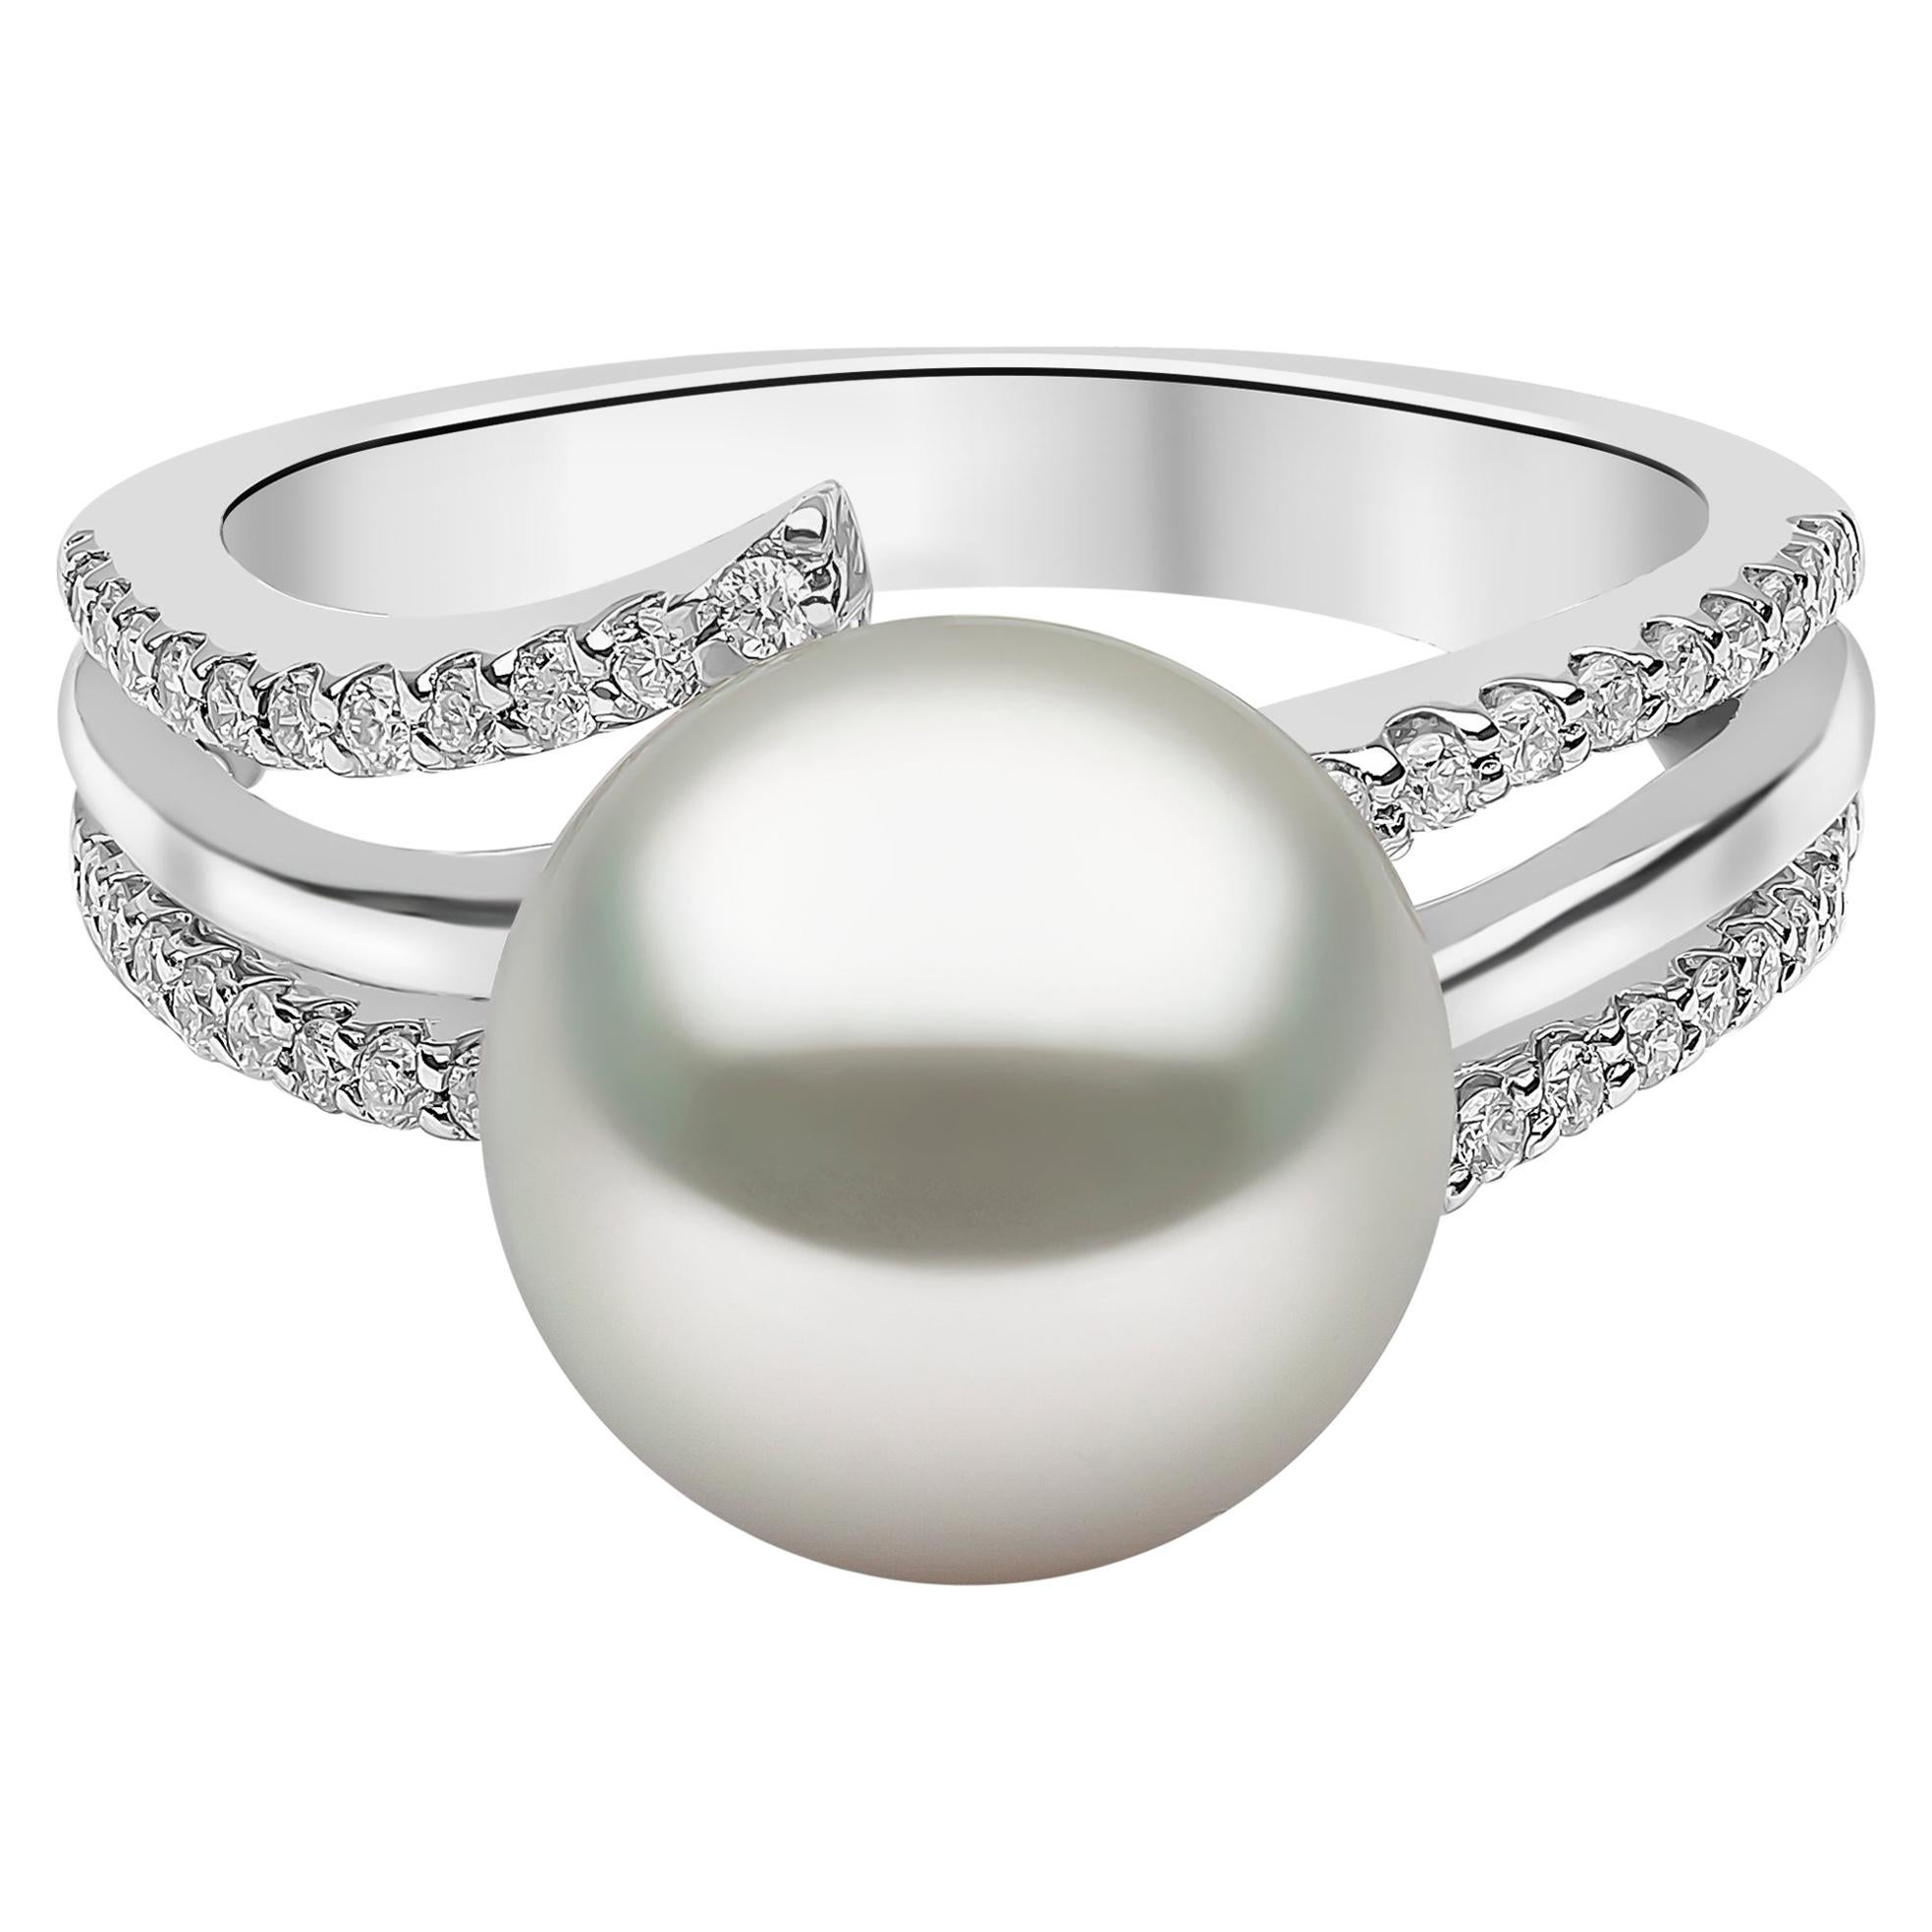 Yoko London South Sea Pearl and Diamond Ring, Set in 18 Karat White Gold